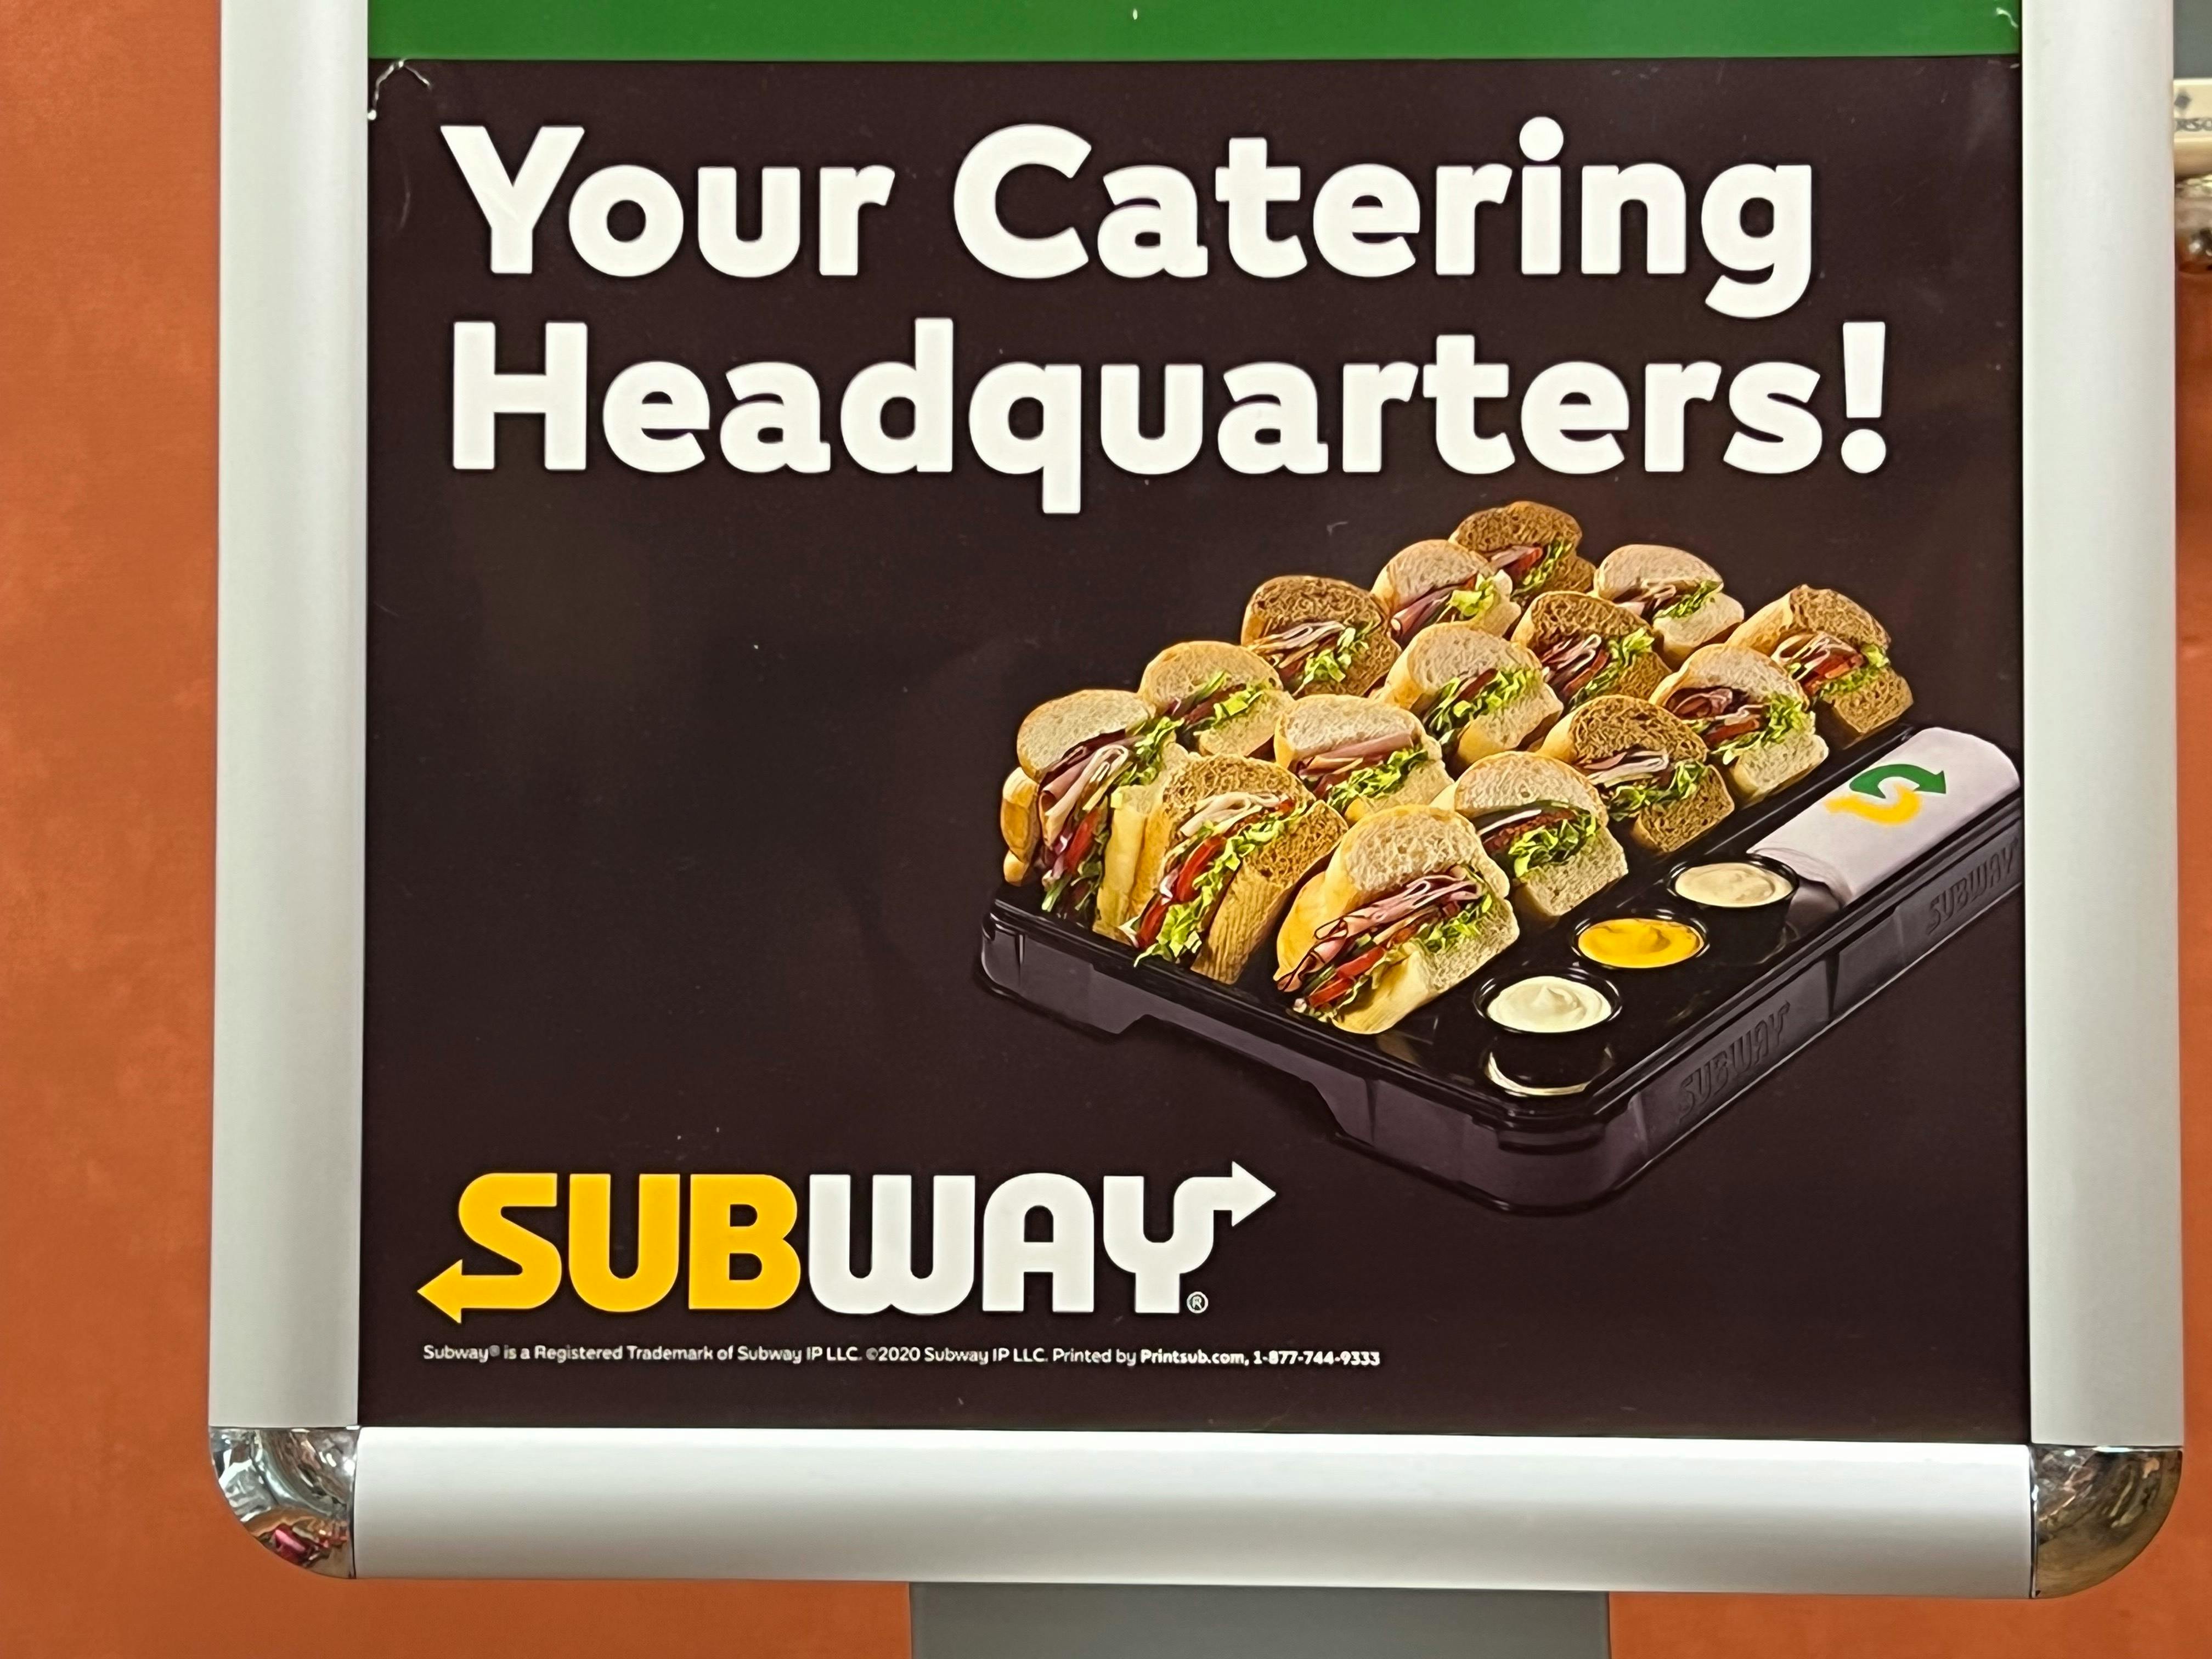 28 fresh subway menu hacks to get free subs more the krazy coupon lady